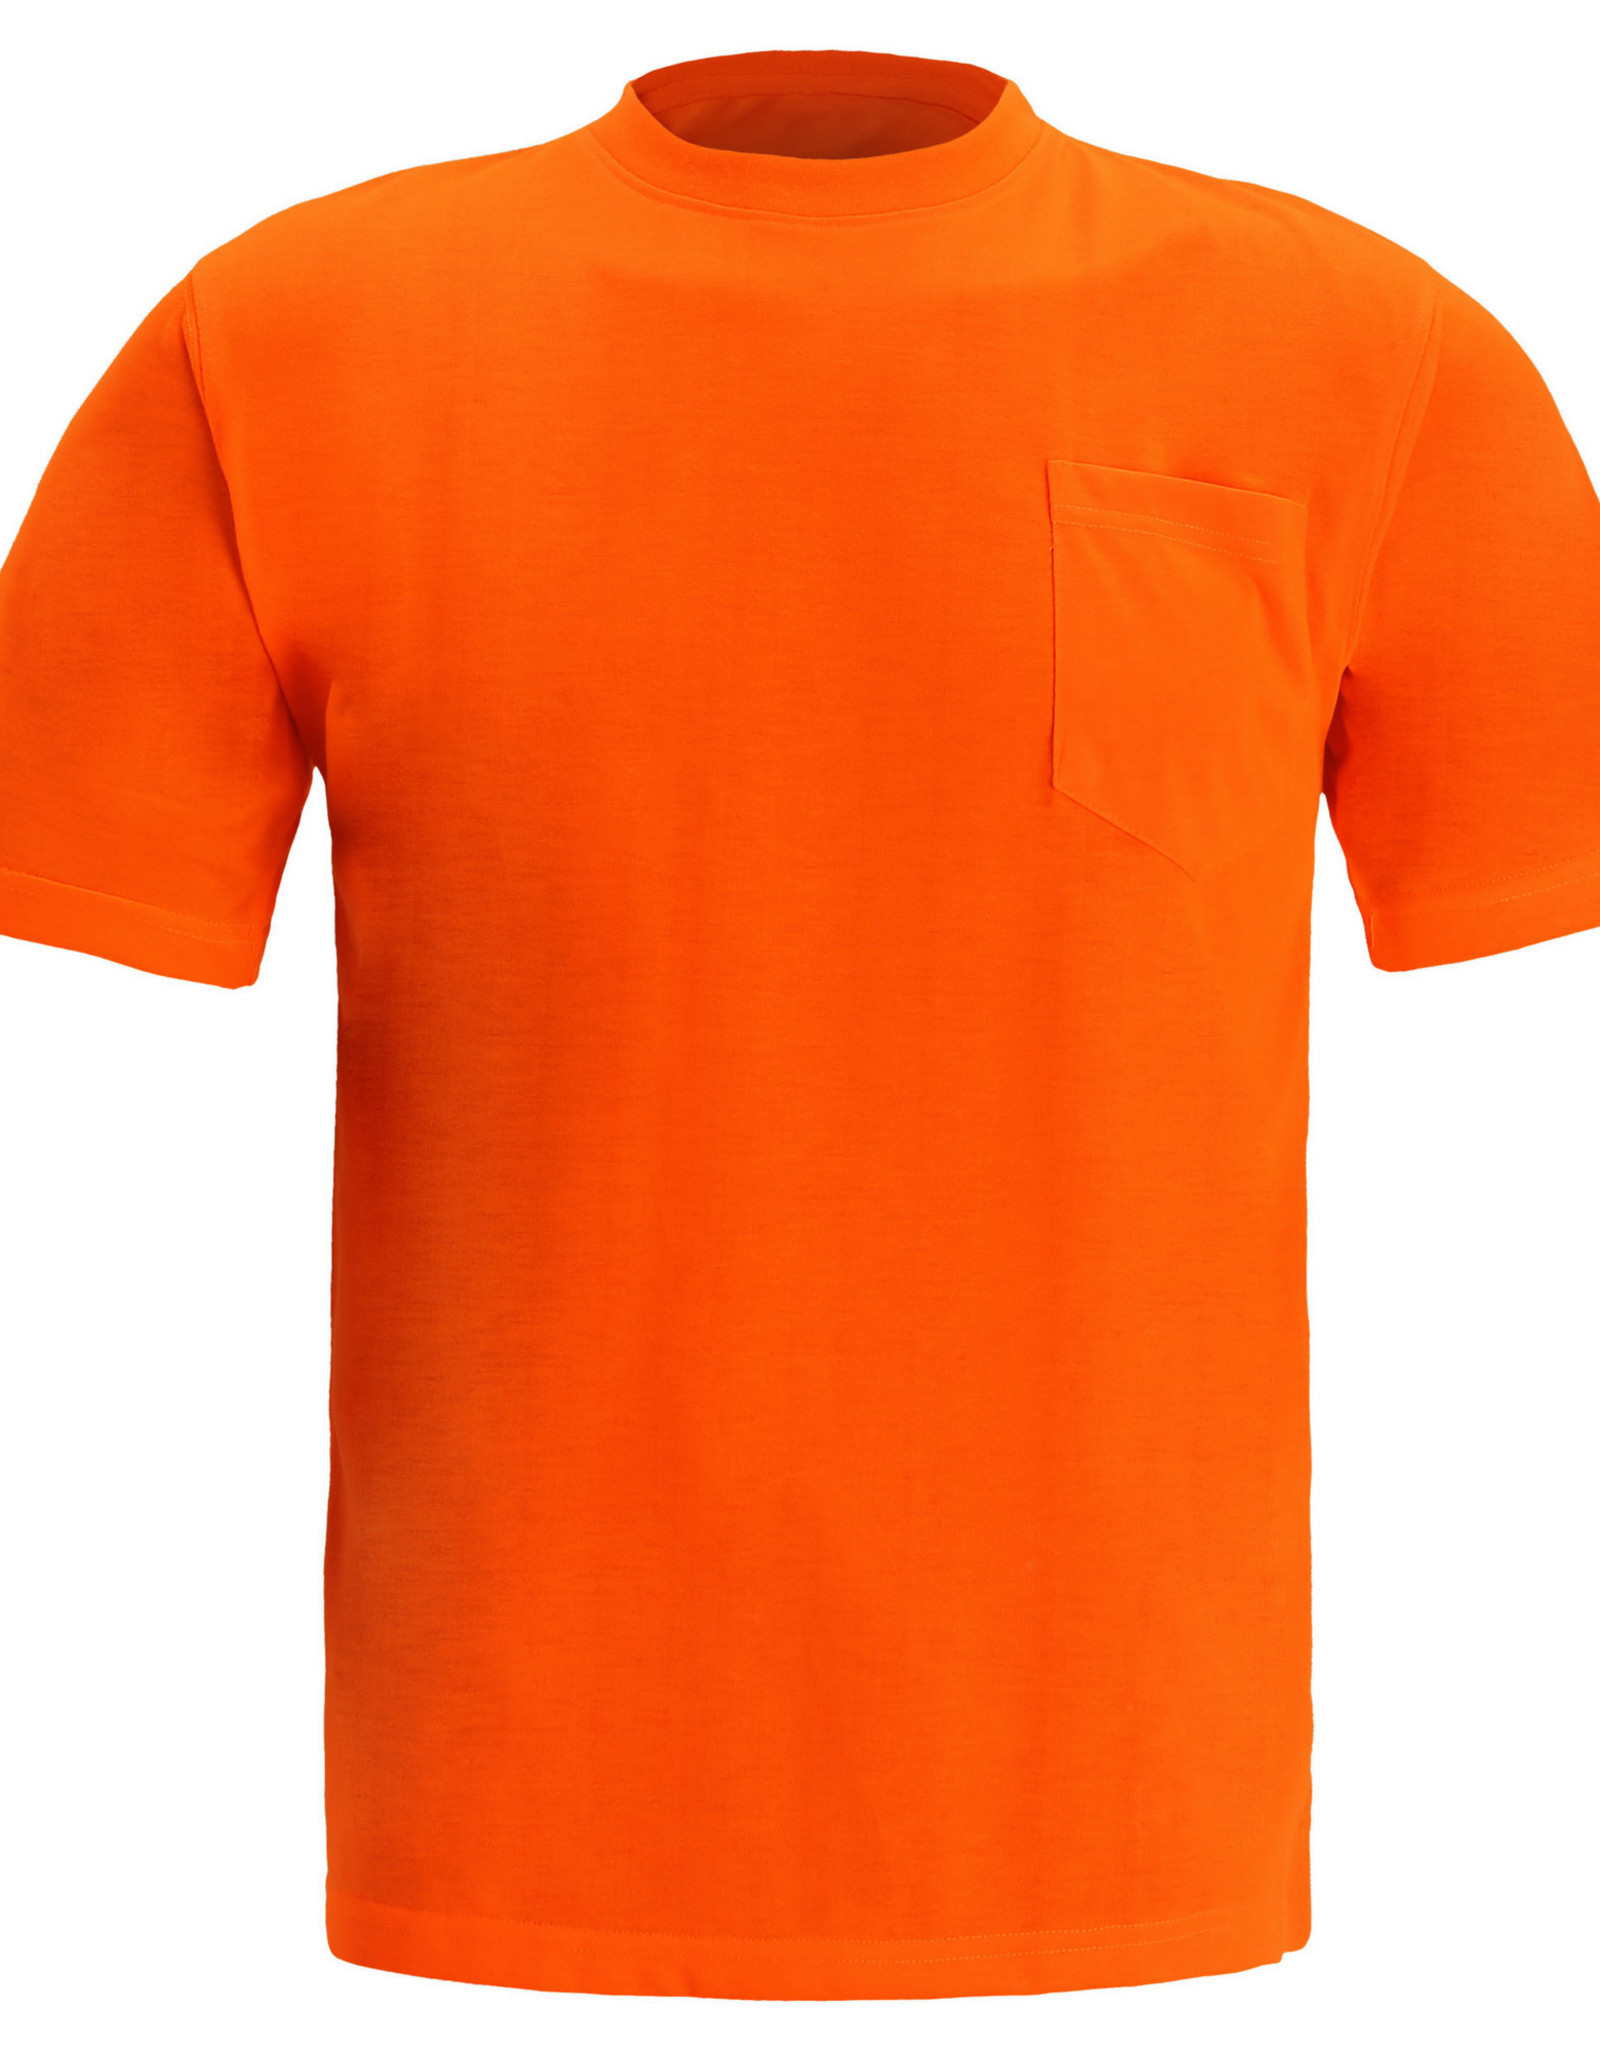 High Viz Orange Short Sleeve T-Shirt, TS113, SZ. XL